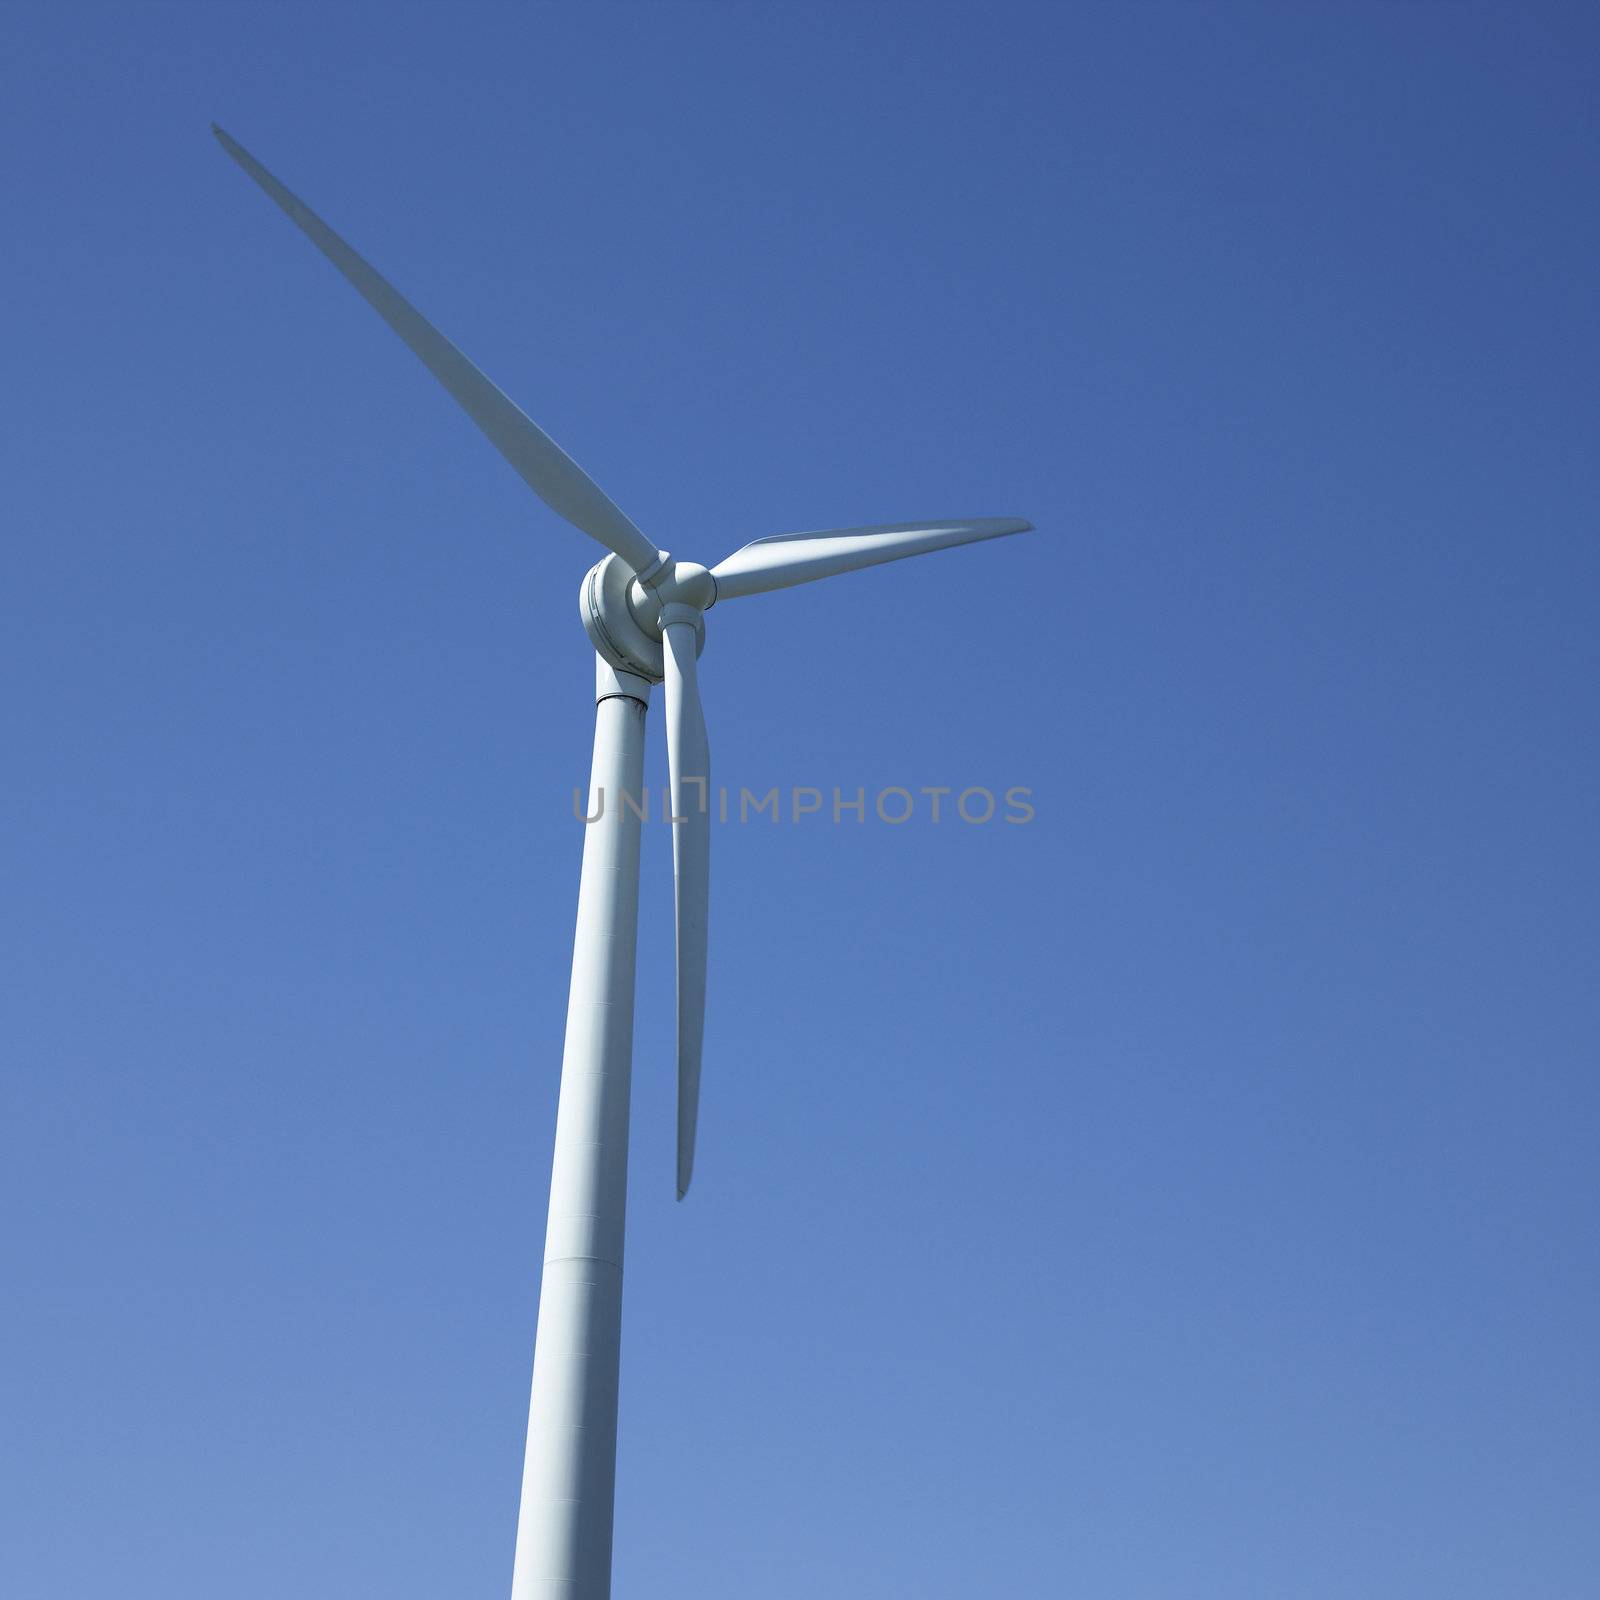 Wind turbine by mmm